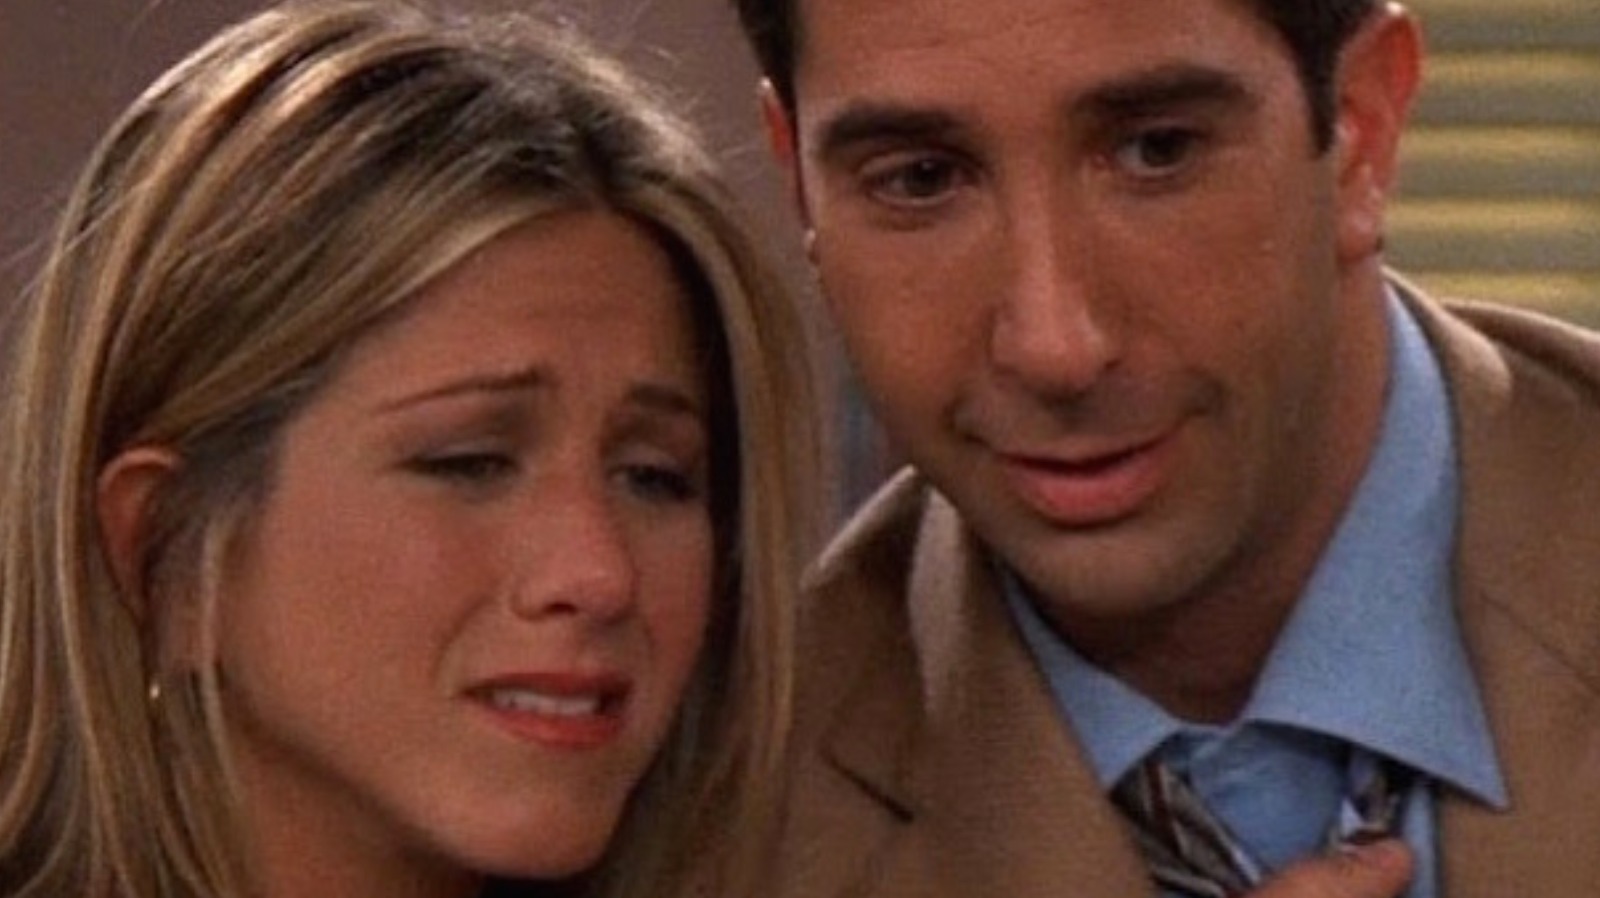 Friends: A Petty Rachel Won't Go to Ross' Party (Season 3 Clip)